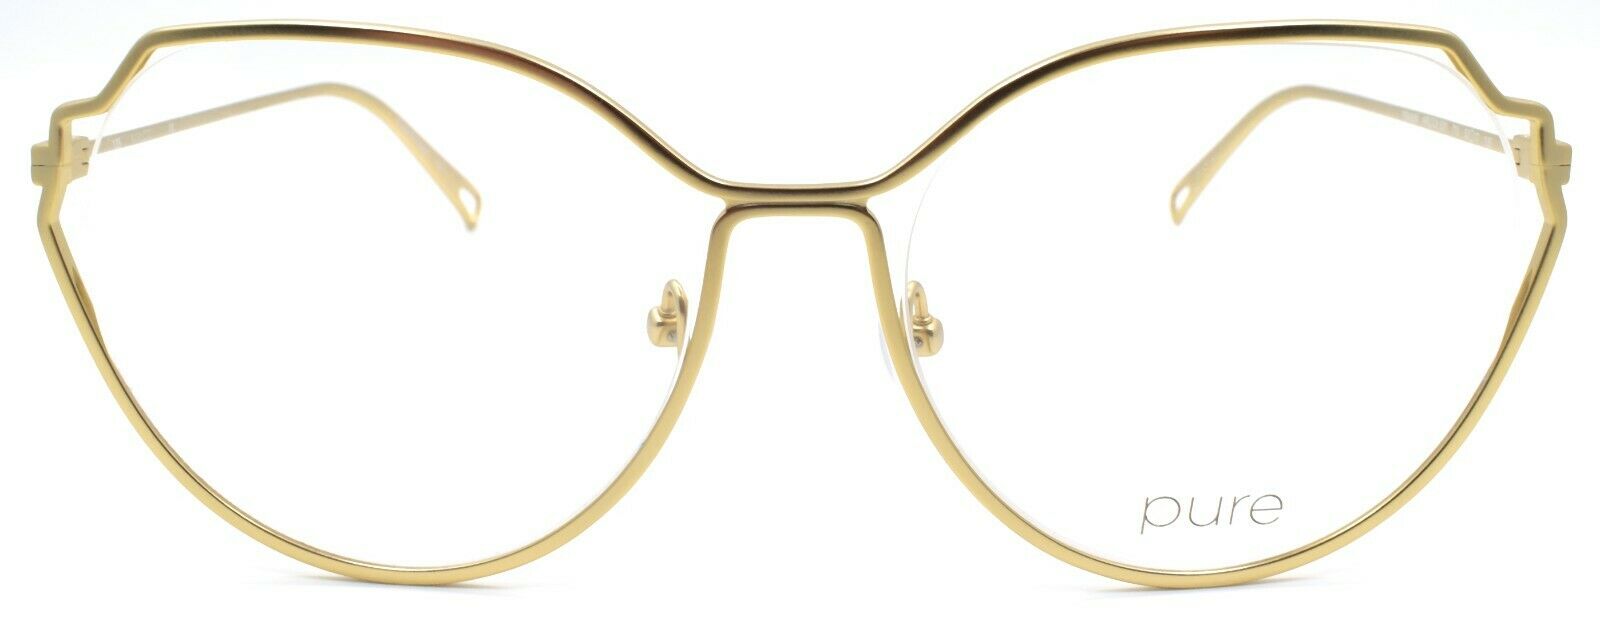 2-Airlock 5001 710 Women's Eyeglasses Frames Titanium 53-17-135 Gold-886895459099-IKSpecs